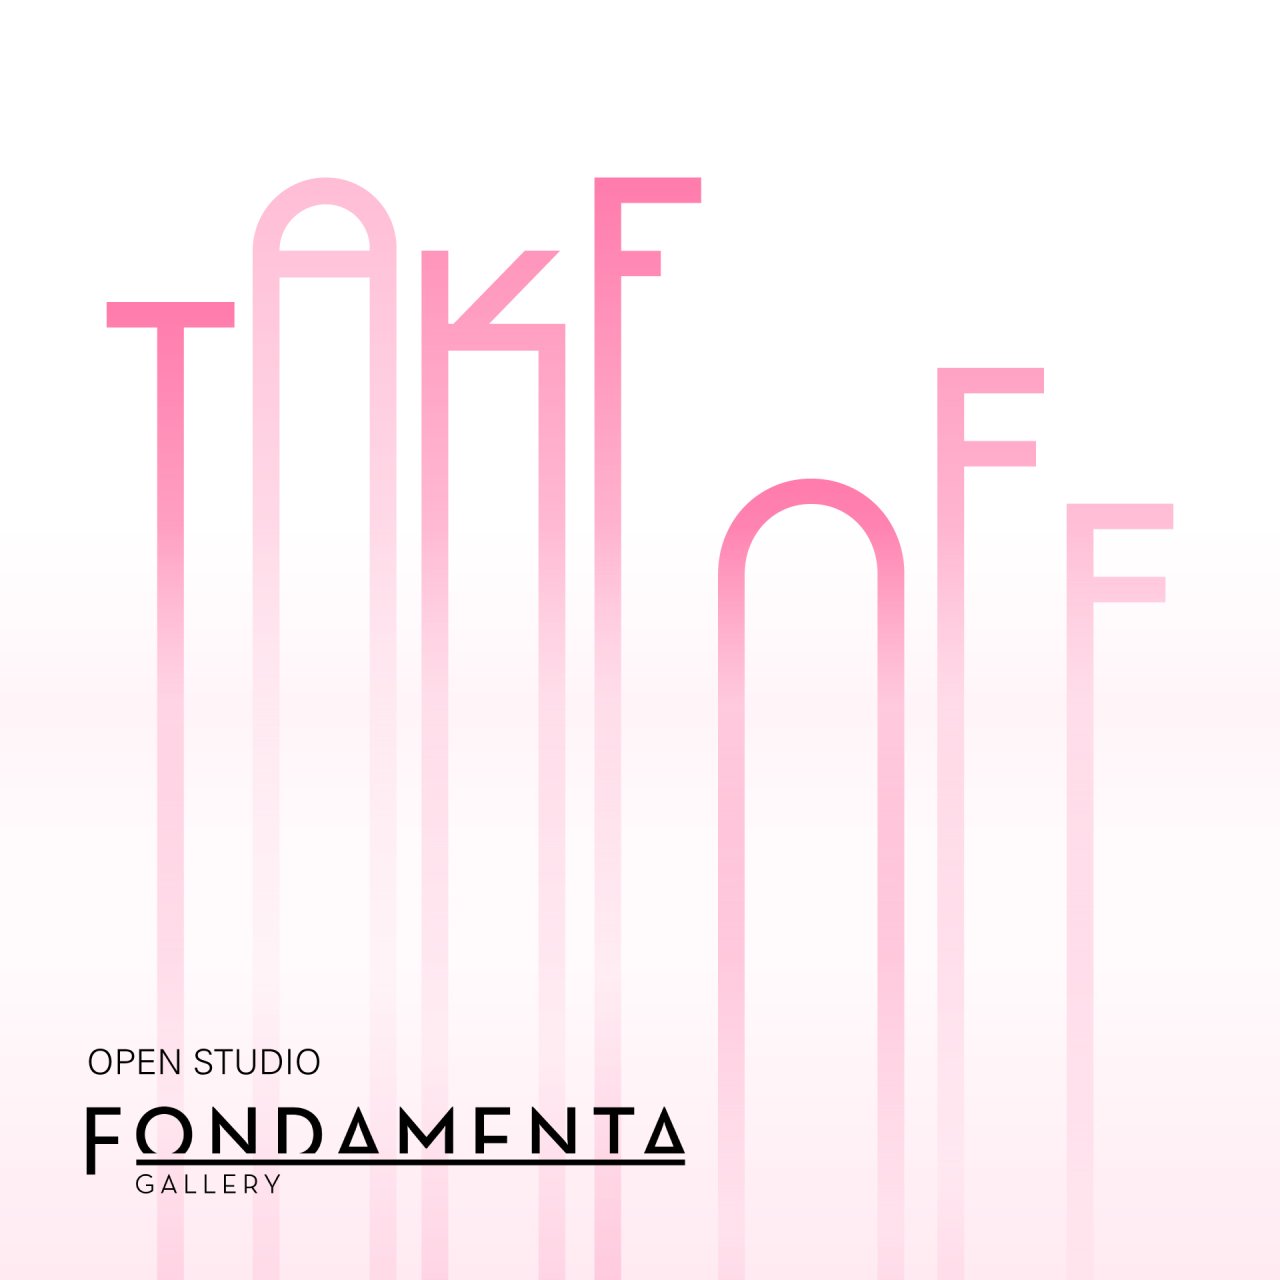 Take Off - Open studio Fondamenta Gallery